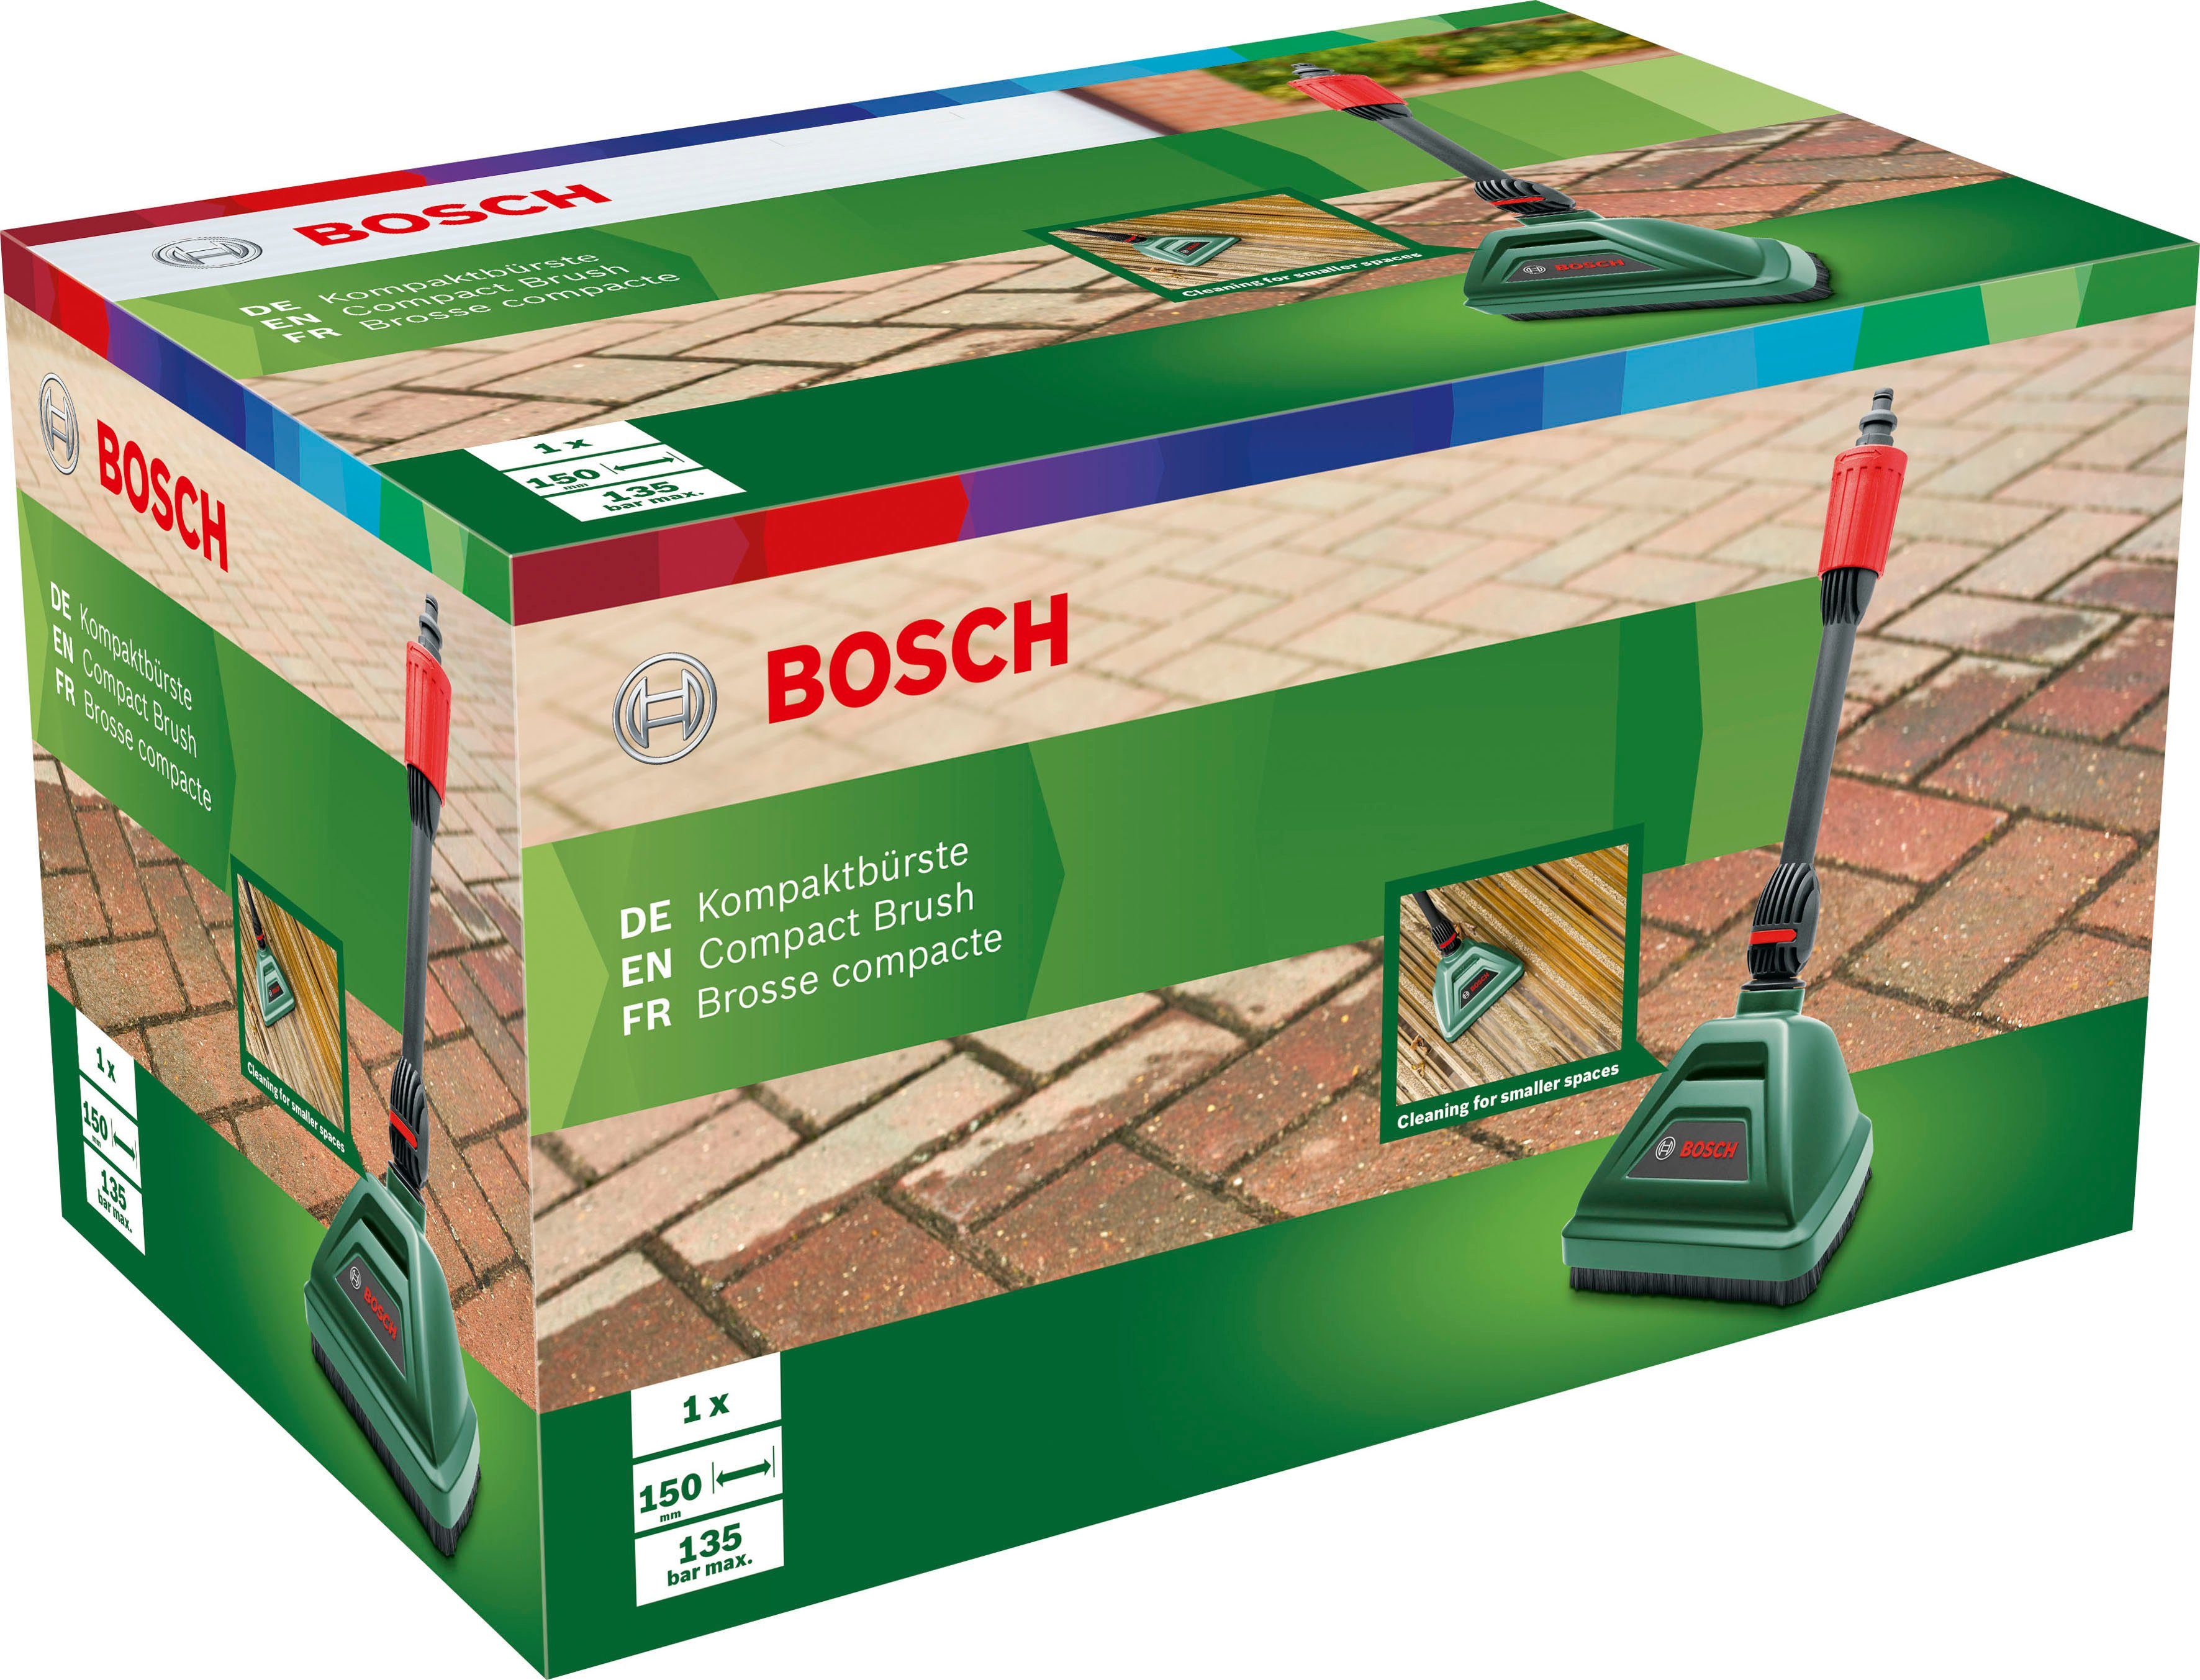 Garden Bosch & Kompaktbürste Flächenreiniger Home